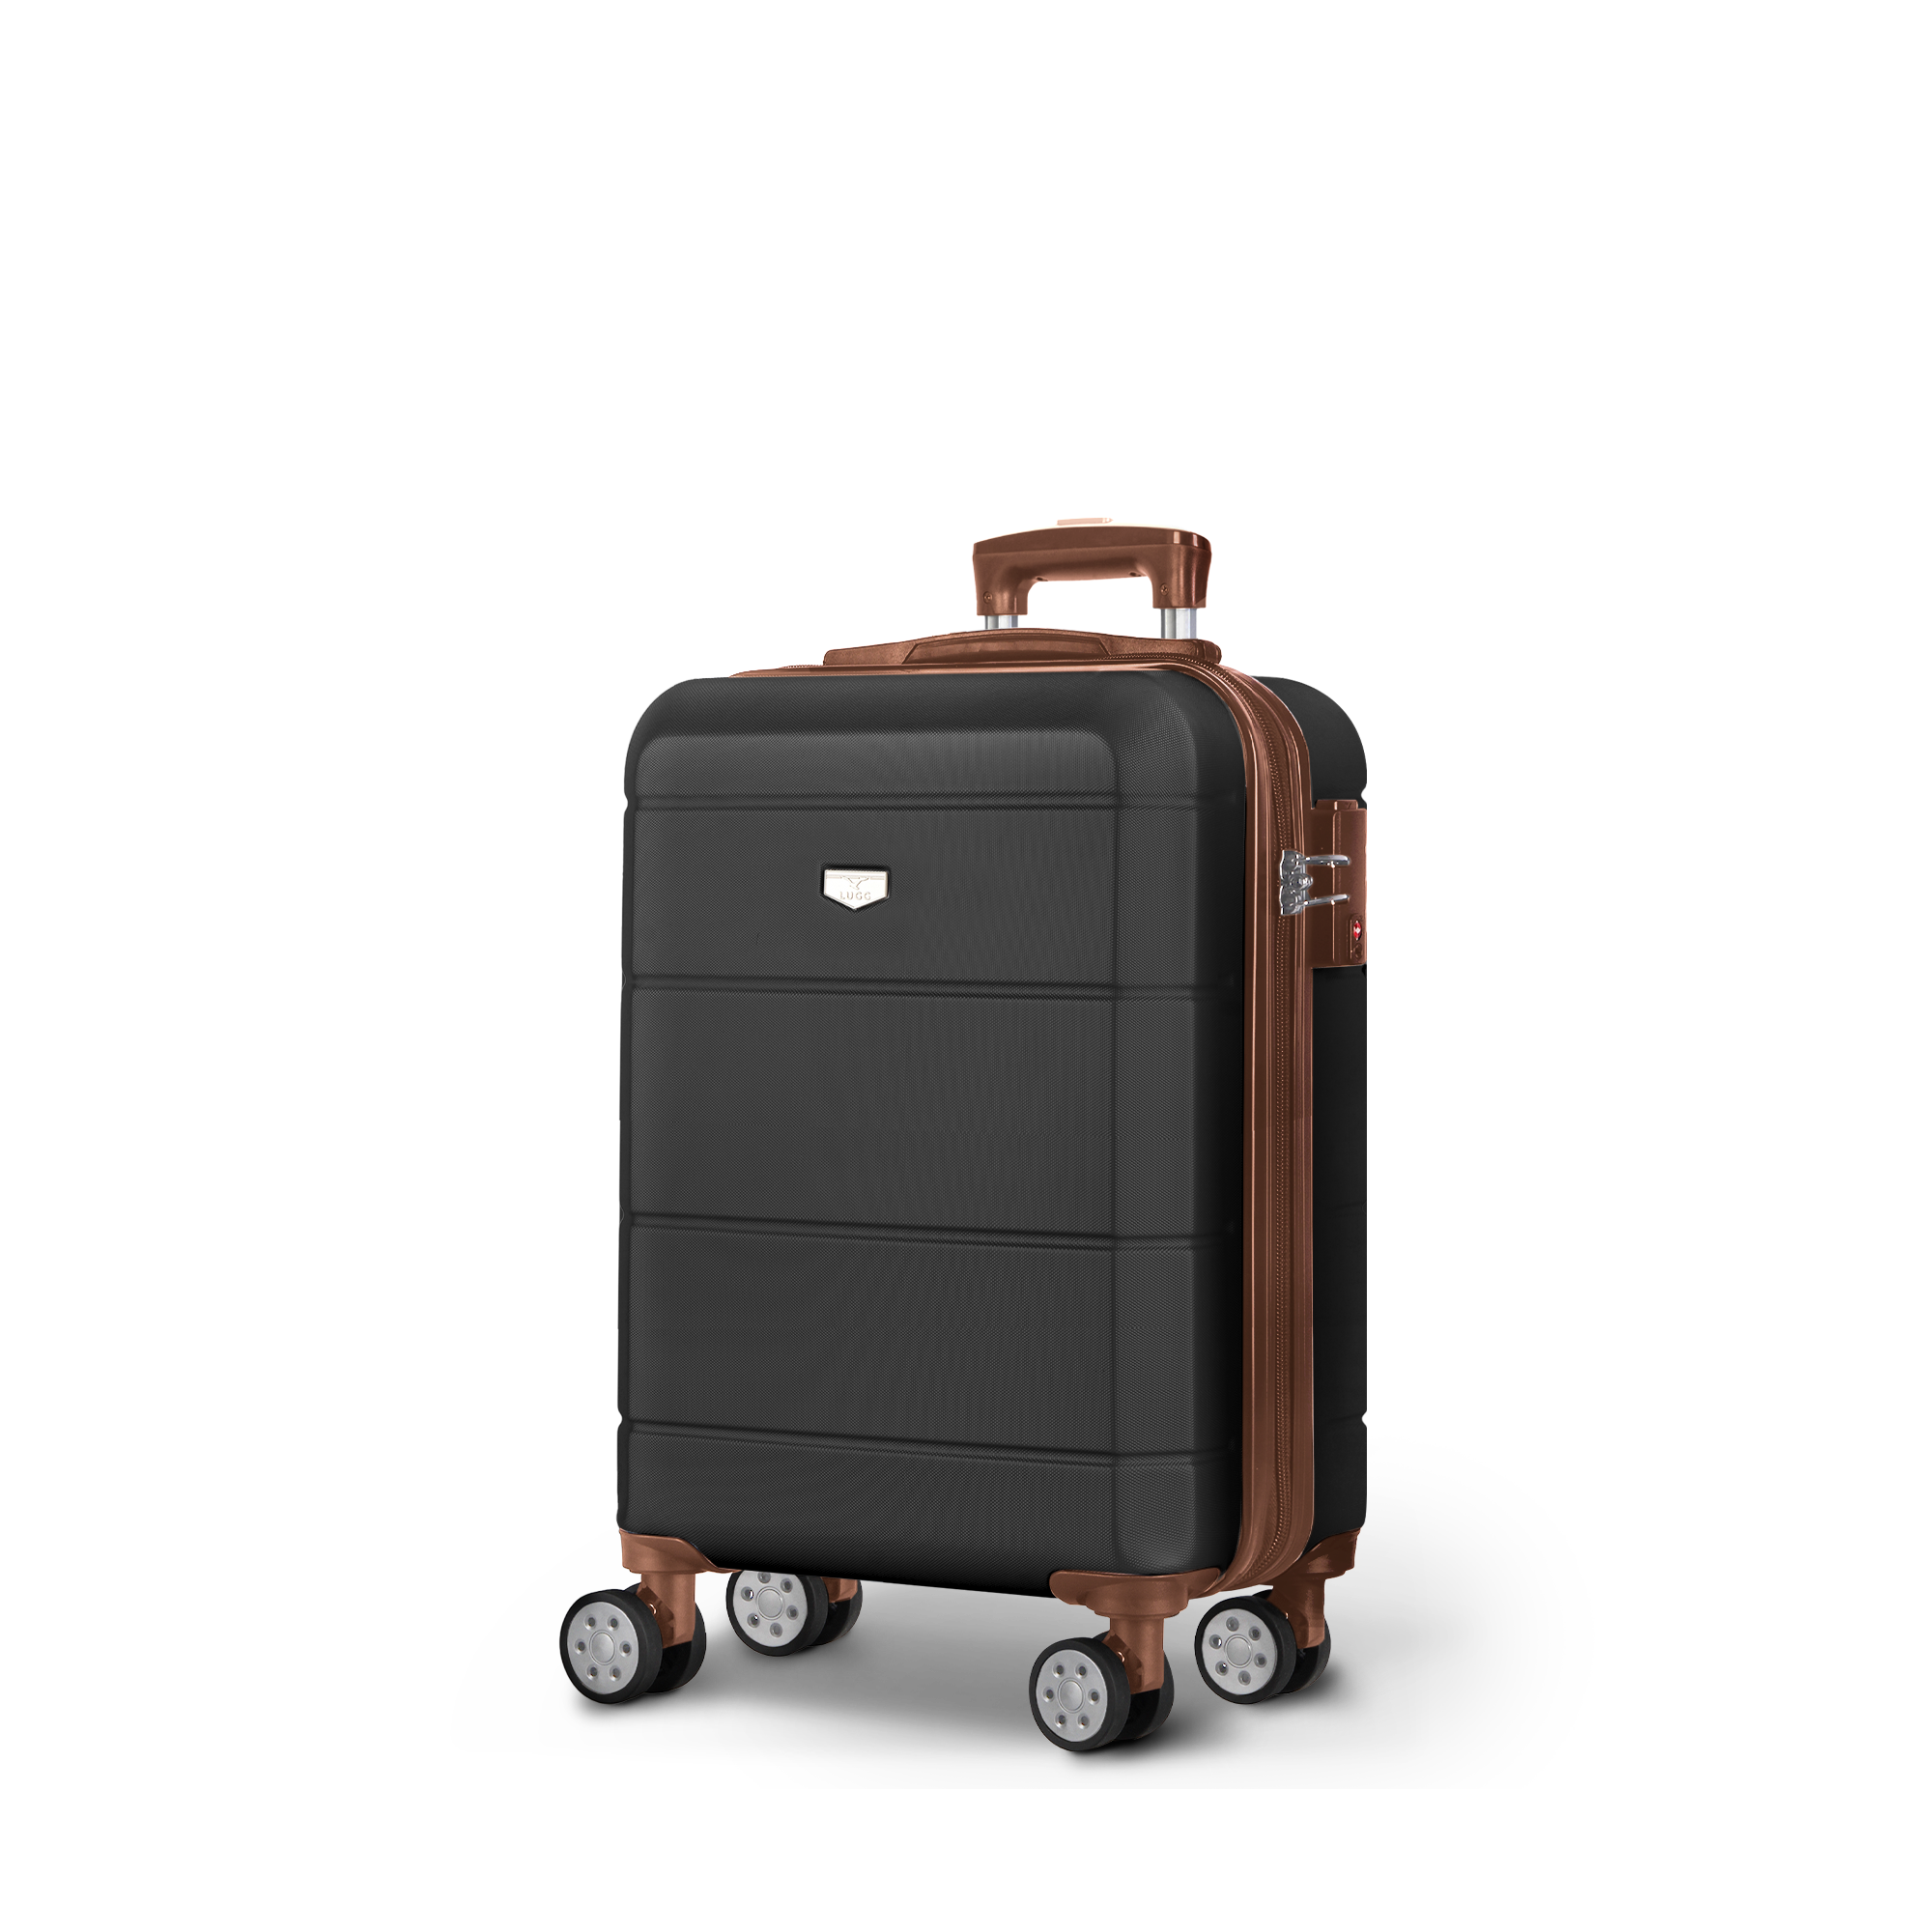 Jetset 20-inch Suitcase in Black & Brown